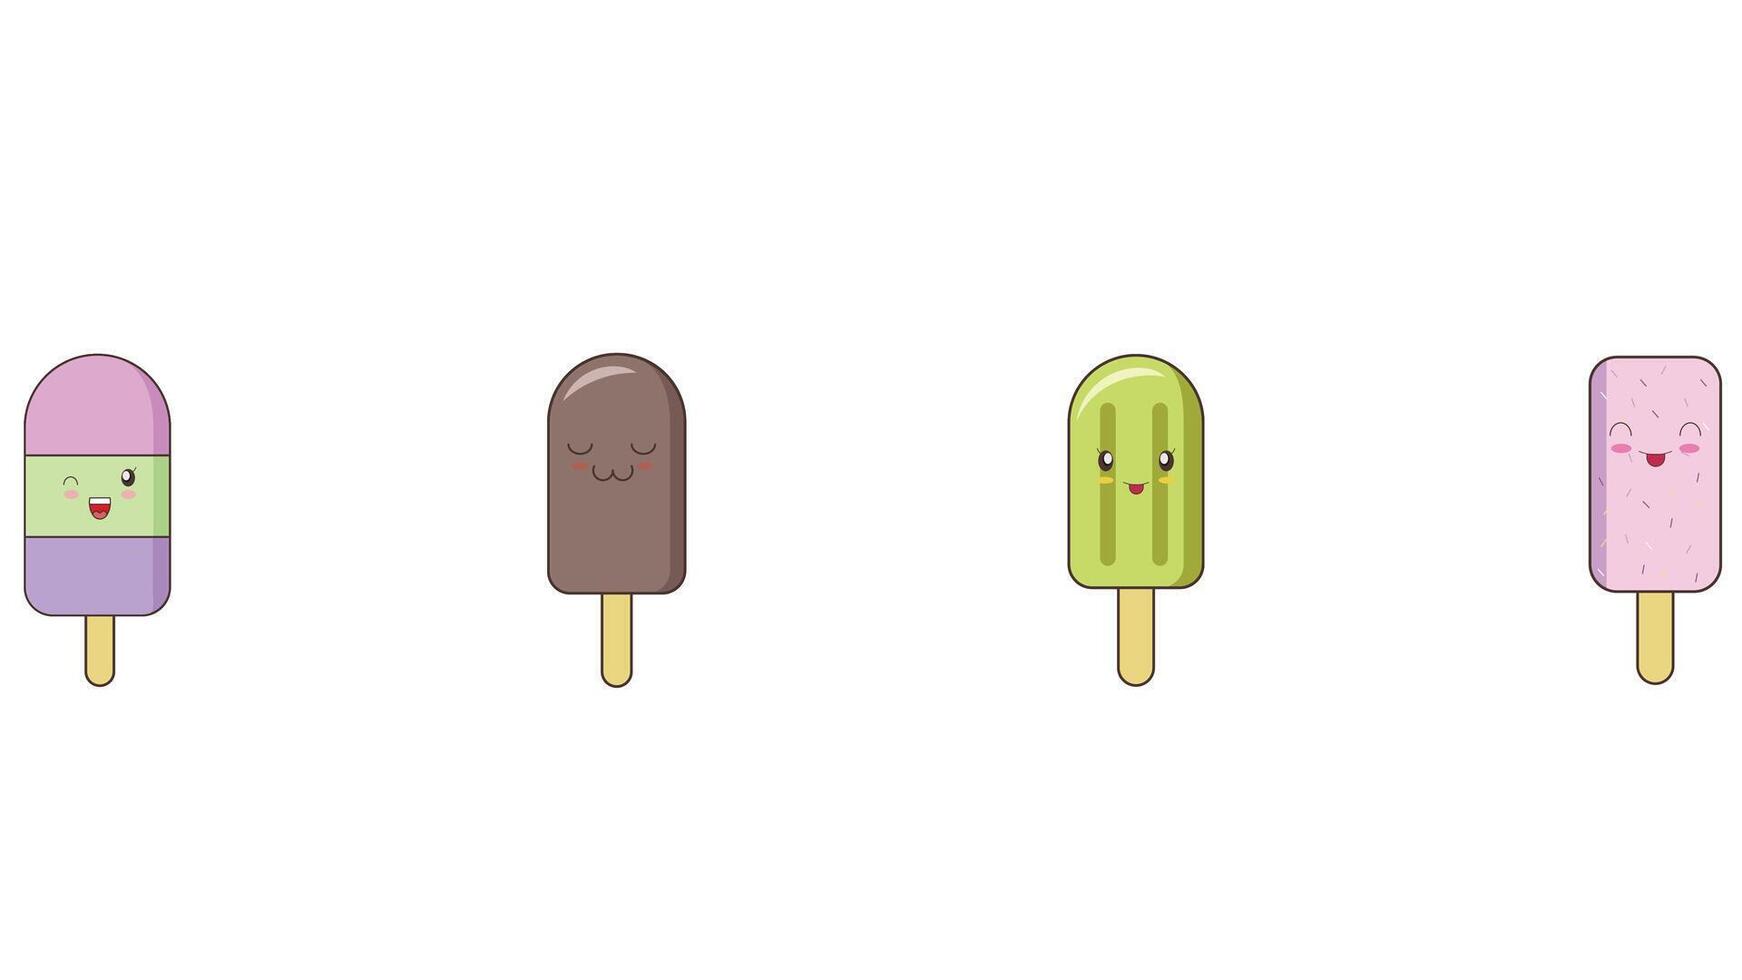 IceCream and sweets vector icon set